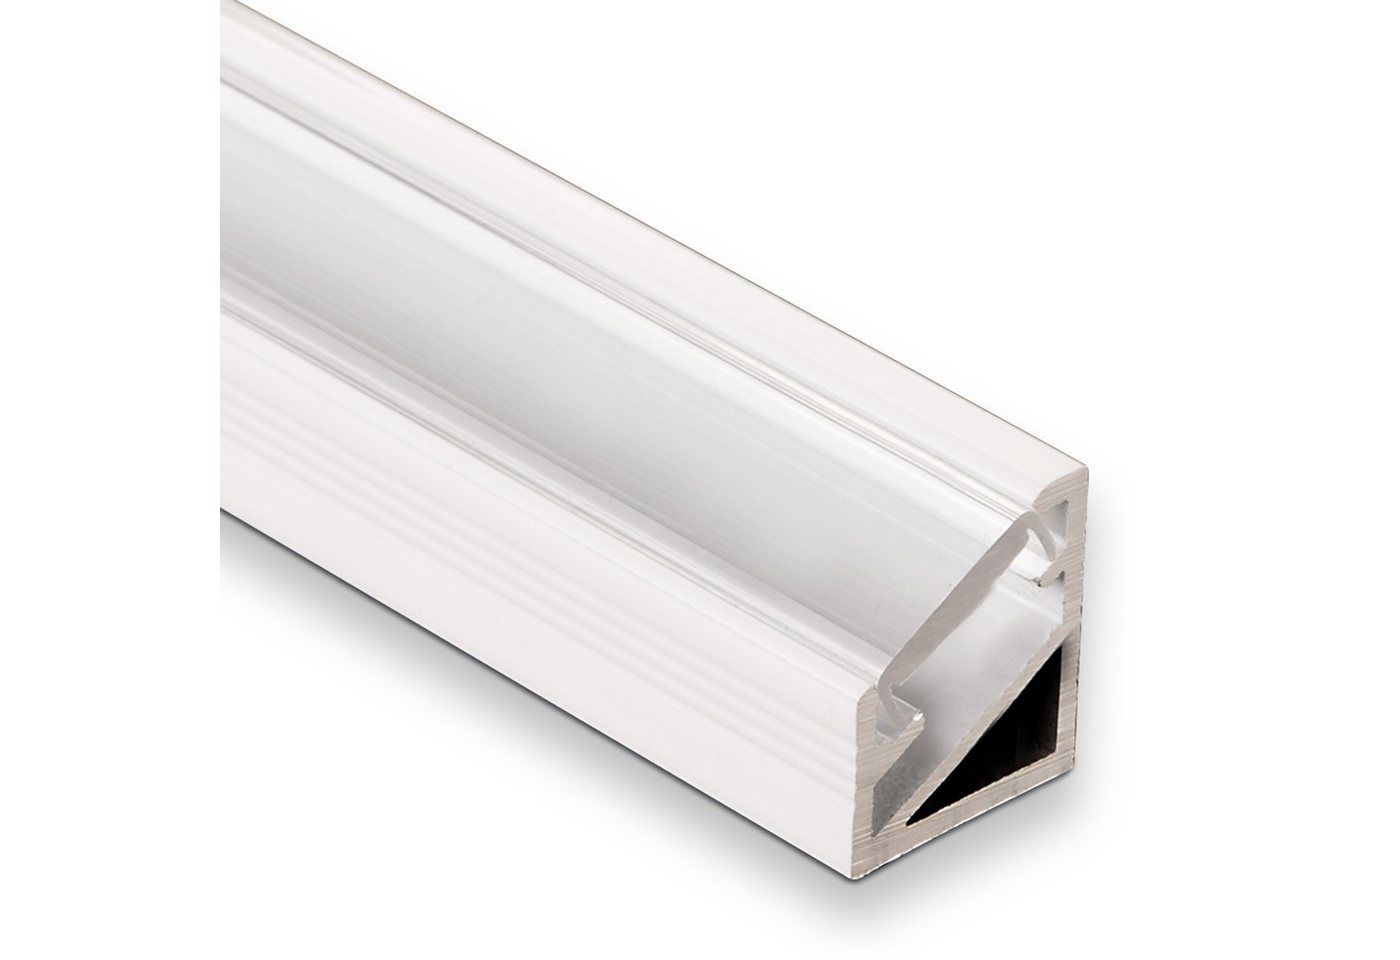 SO-TECH® LED-Stripe-Profil 10 Stück LED-Aluprofil 44 oder 55, Länge je 2 m, Abdeckung opal oder klar, versch. Ausführungen von SO-TECH®